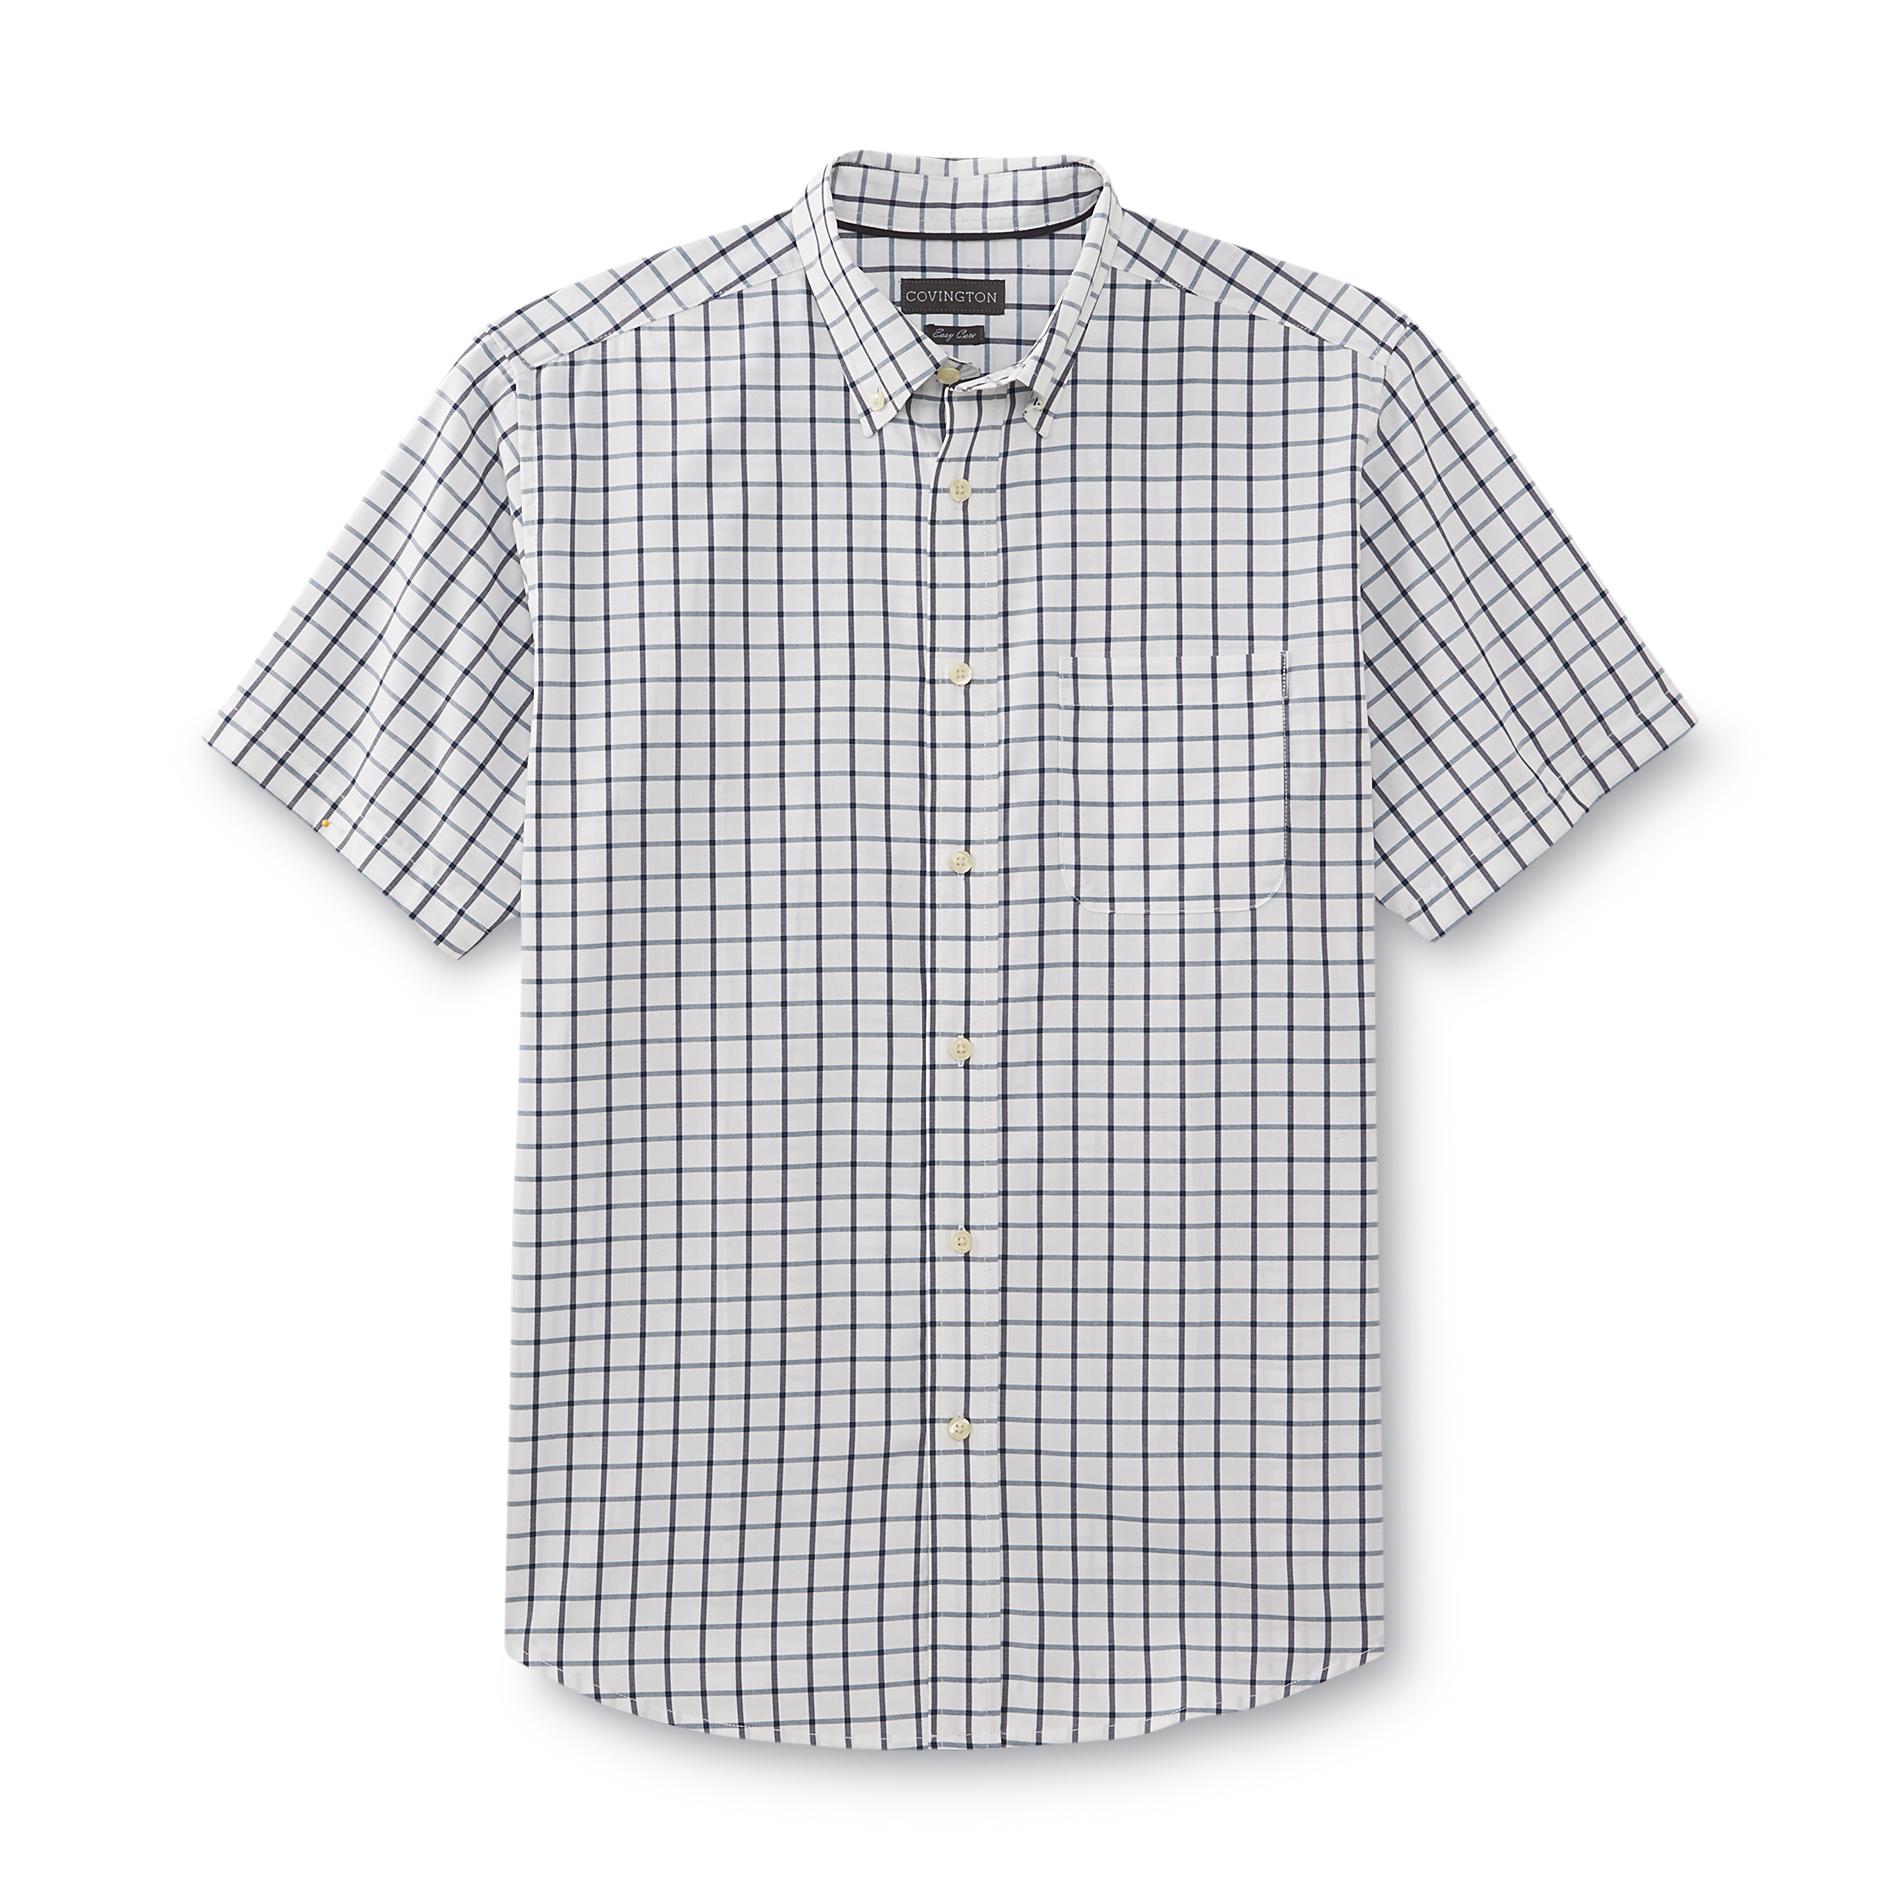 Covington Men's Easy Care Short-Sleeve Shirt - Check Pattern